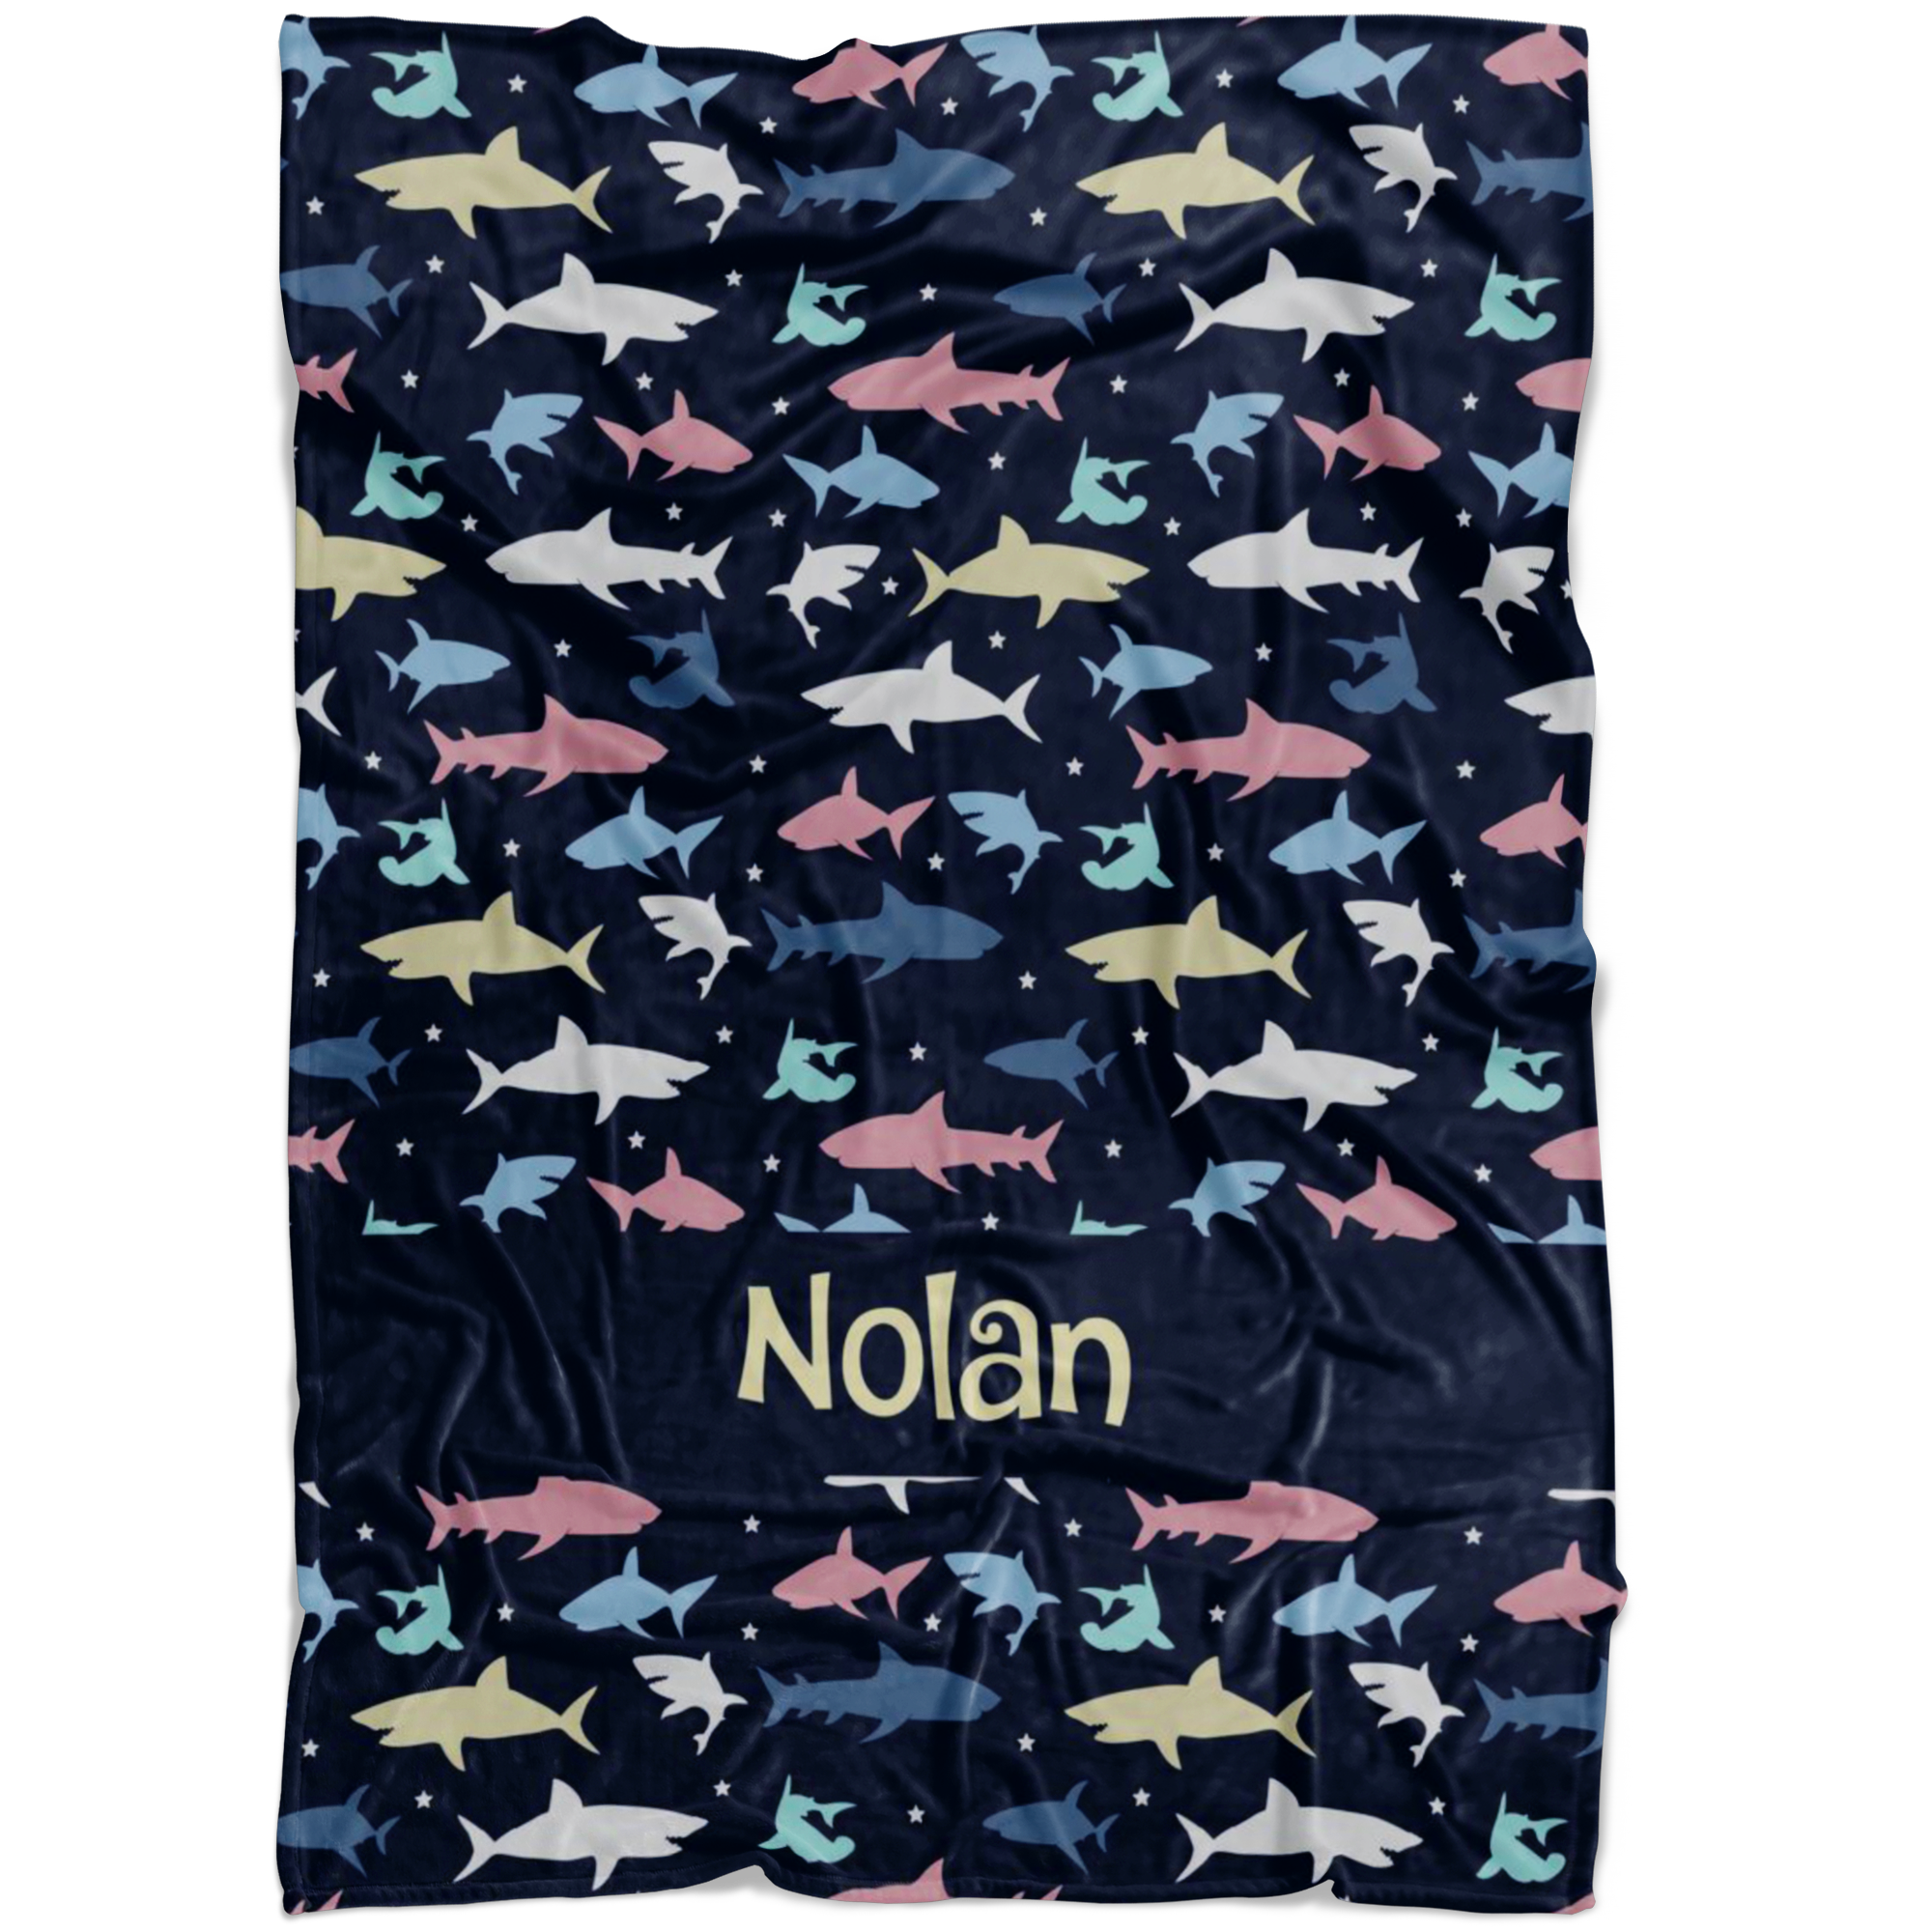 Personalized Name Shark Blanket for Kids - Nolan